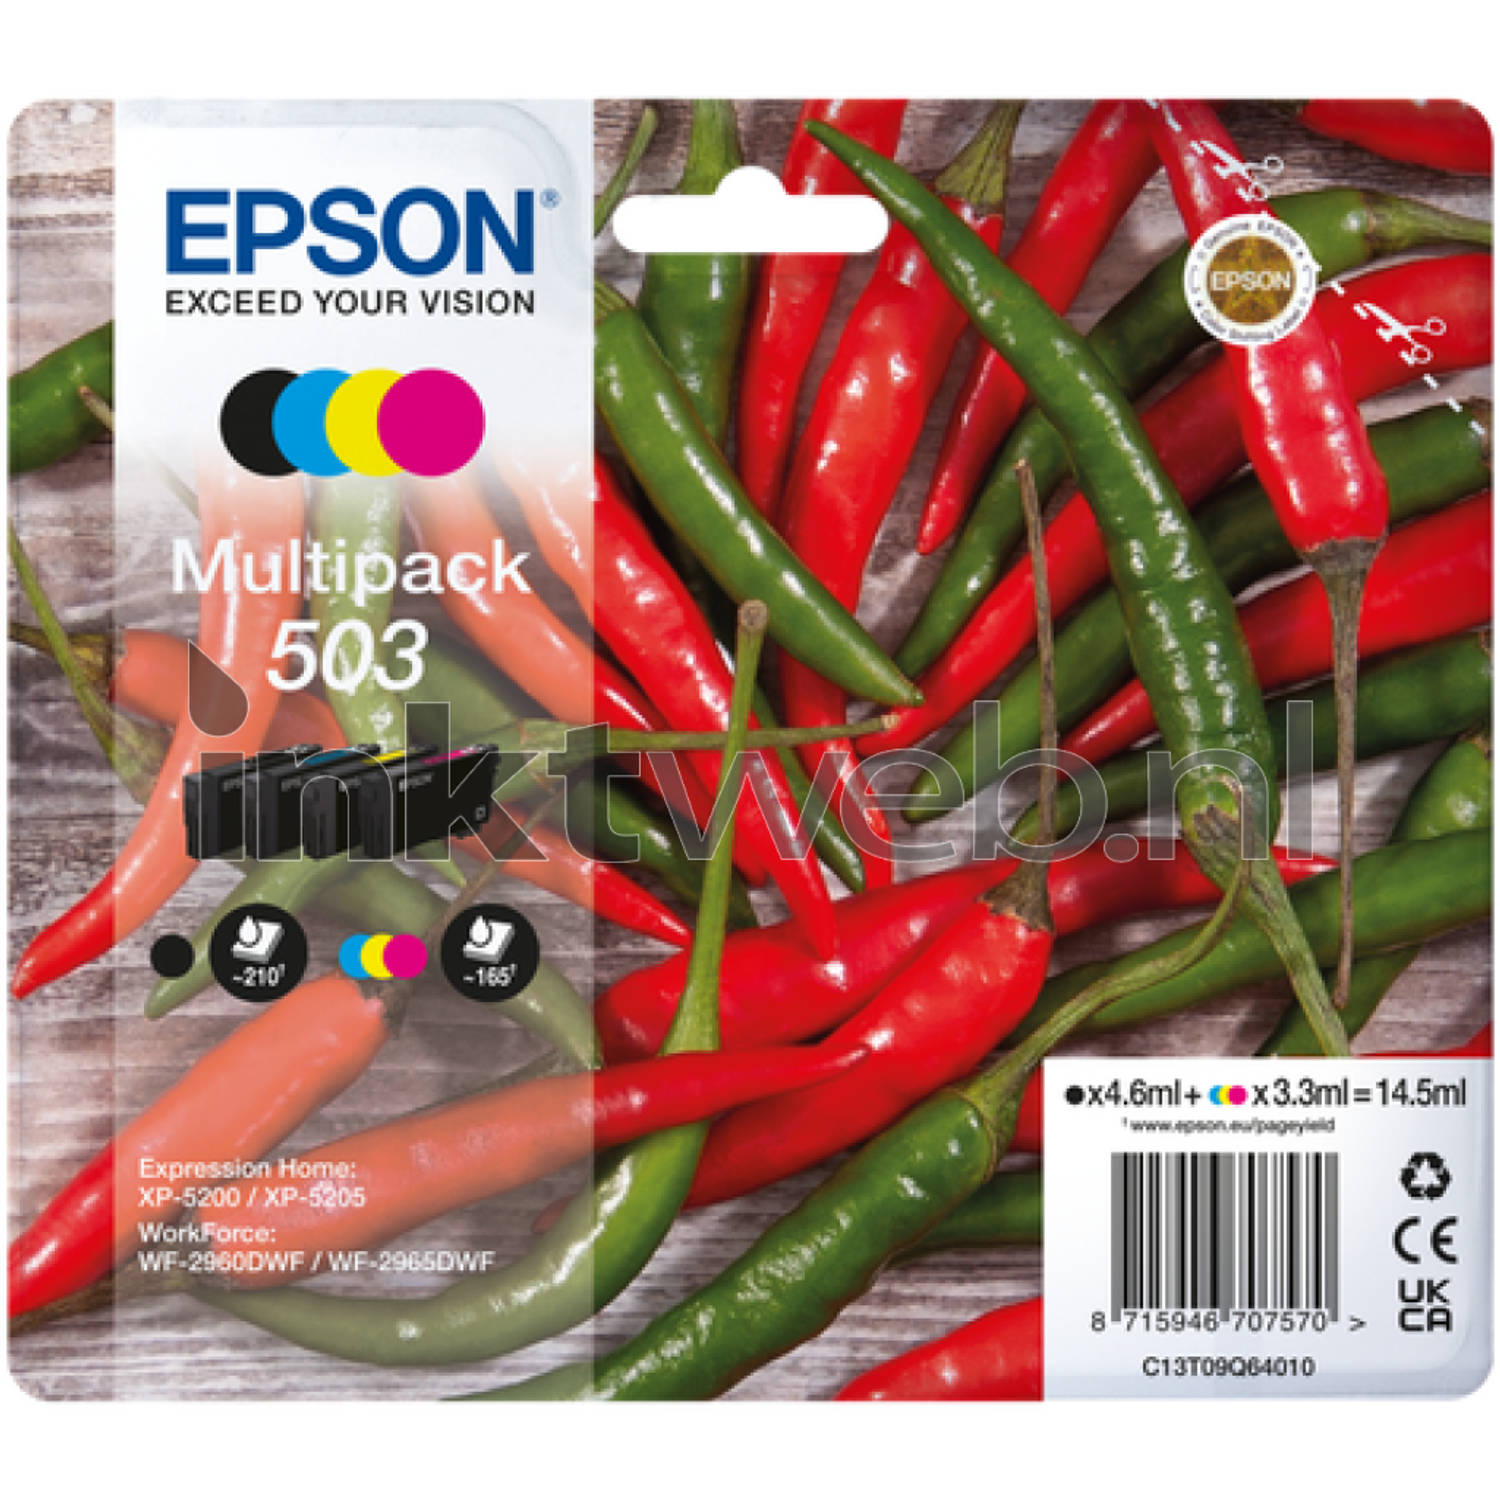 Epson 503, EasyMail Multipack